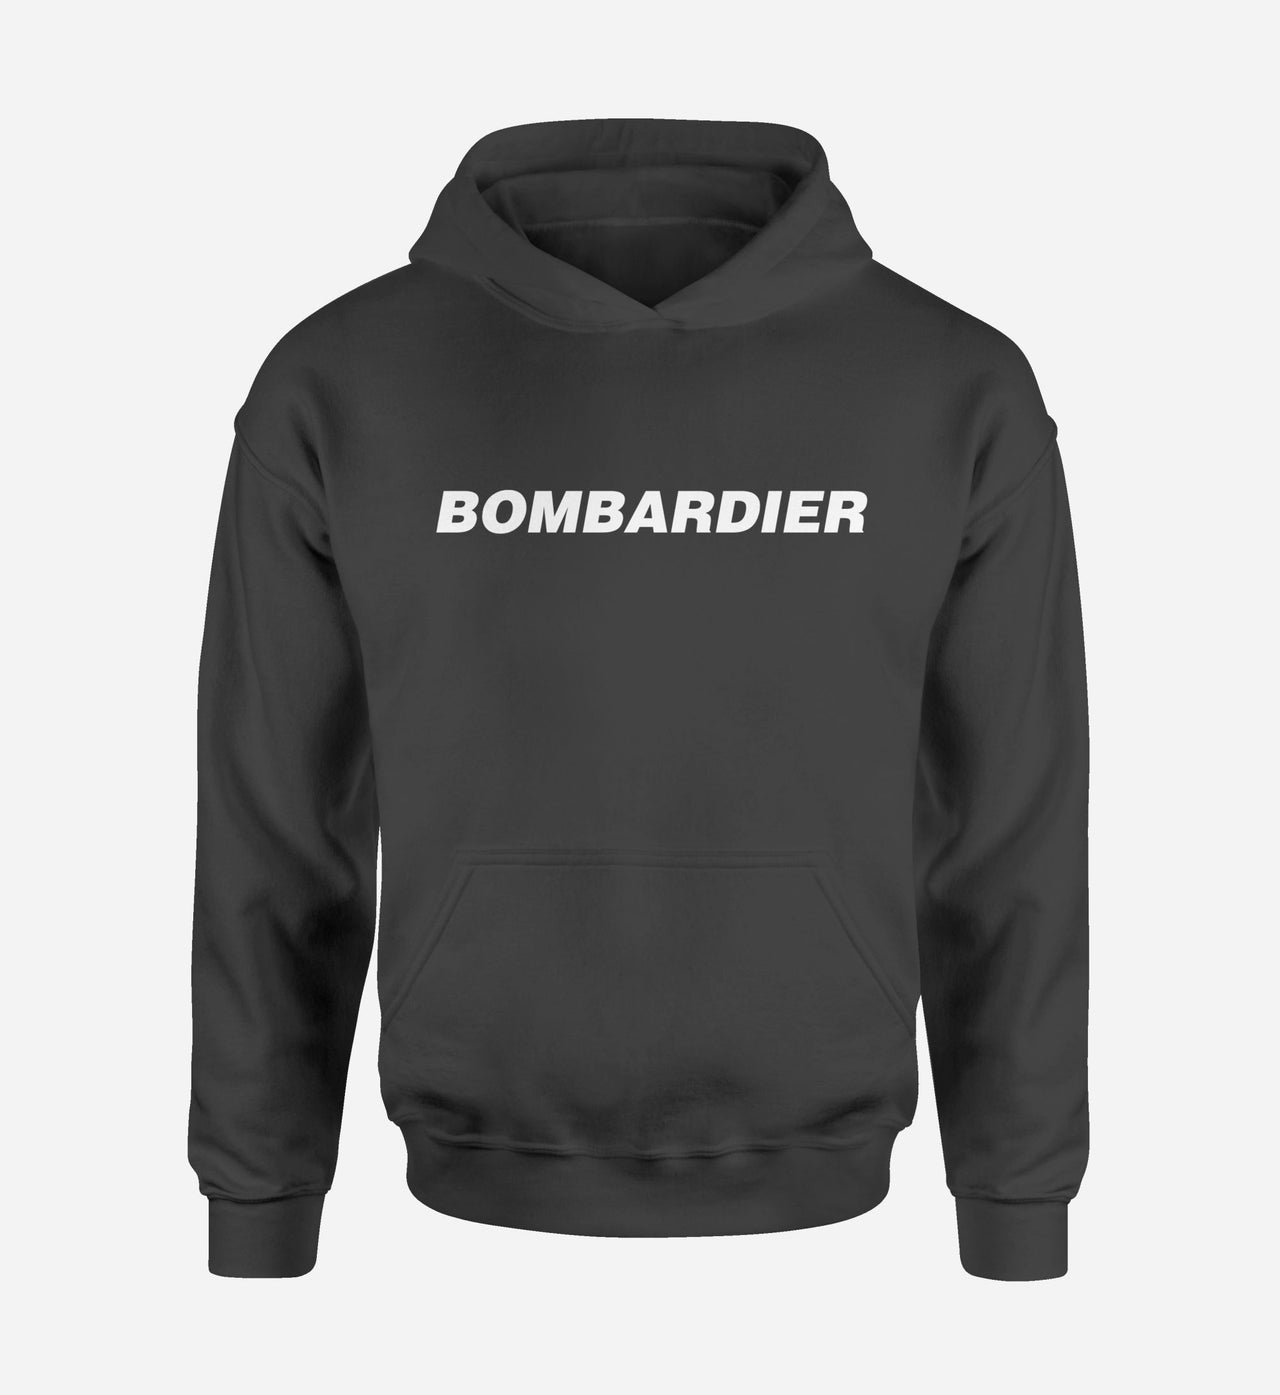 Bombardier & Text Designed Hoodies